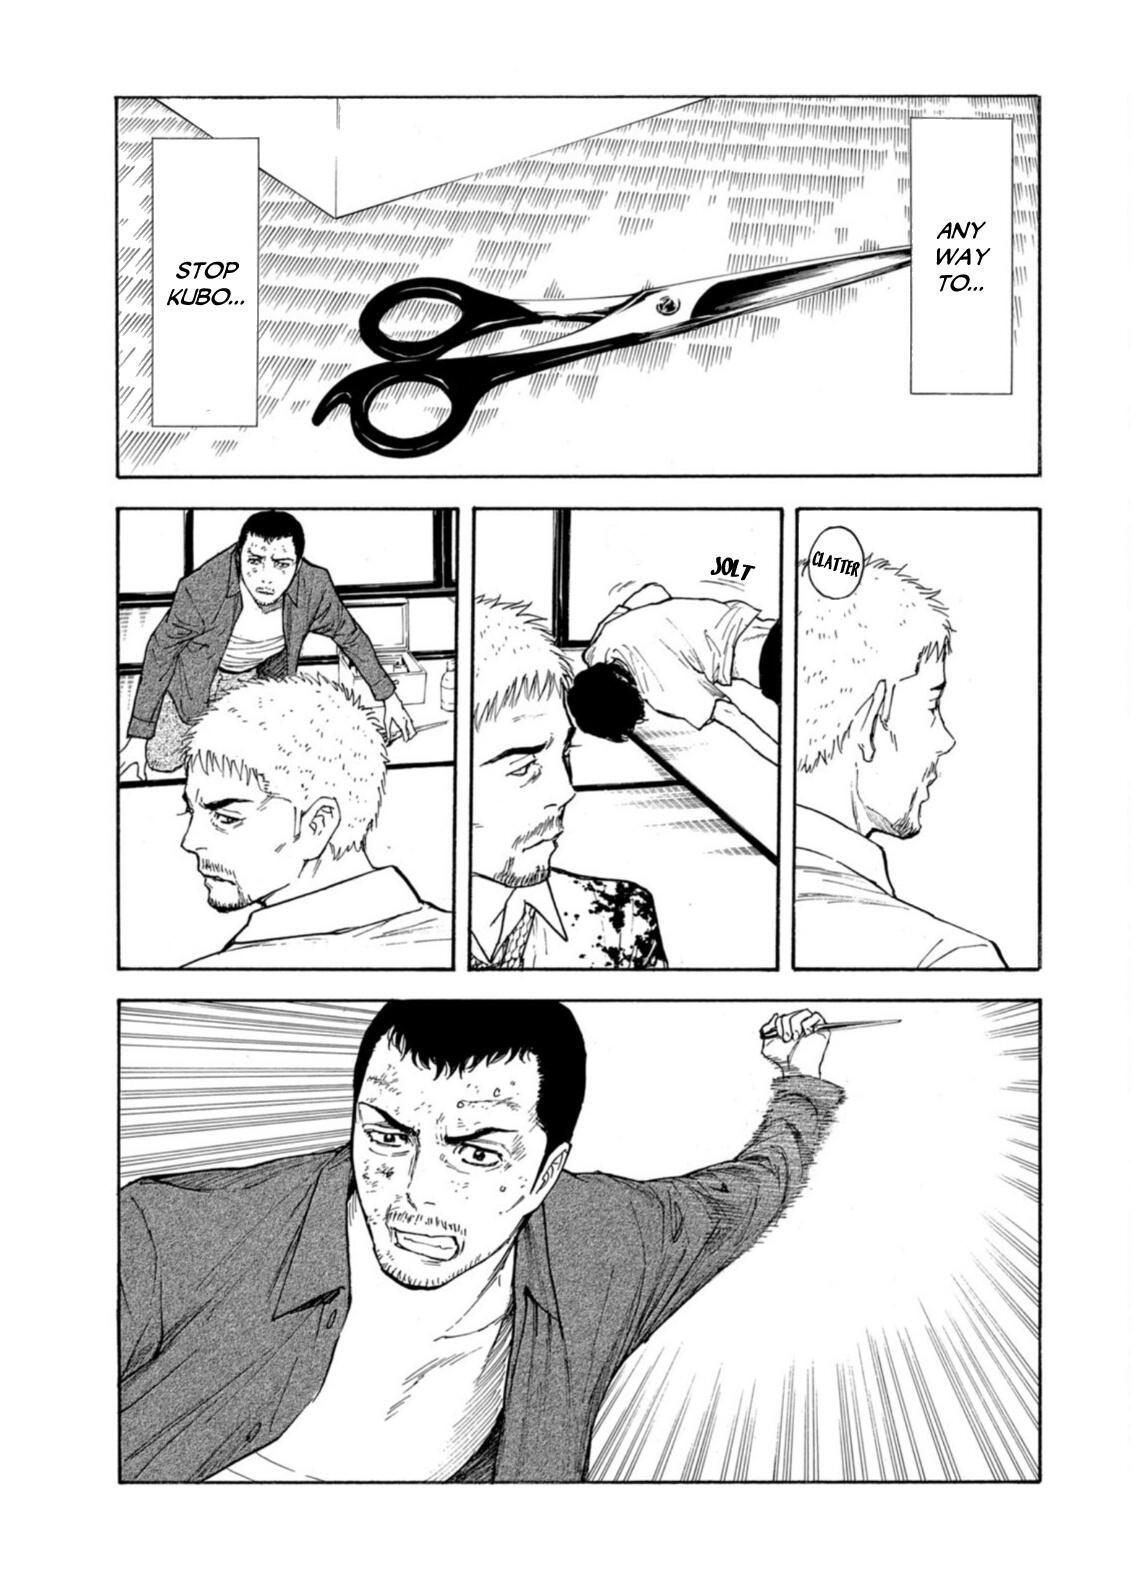 Read My Home Hero Vol.7 Chapter 60: Kyoichi's Plan - Manganelo